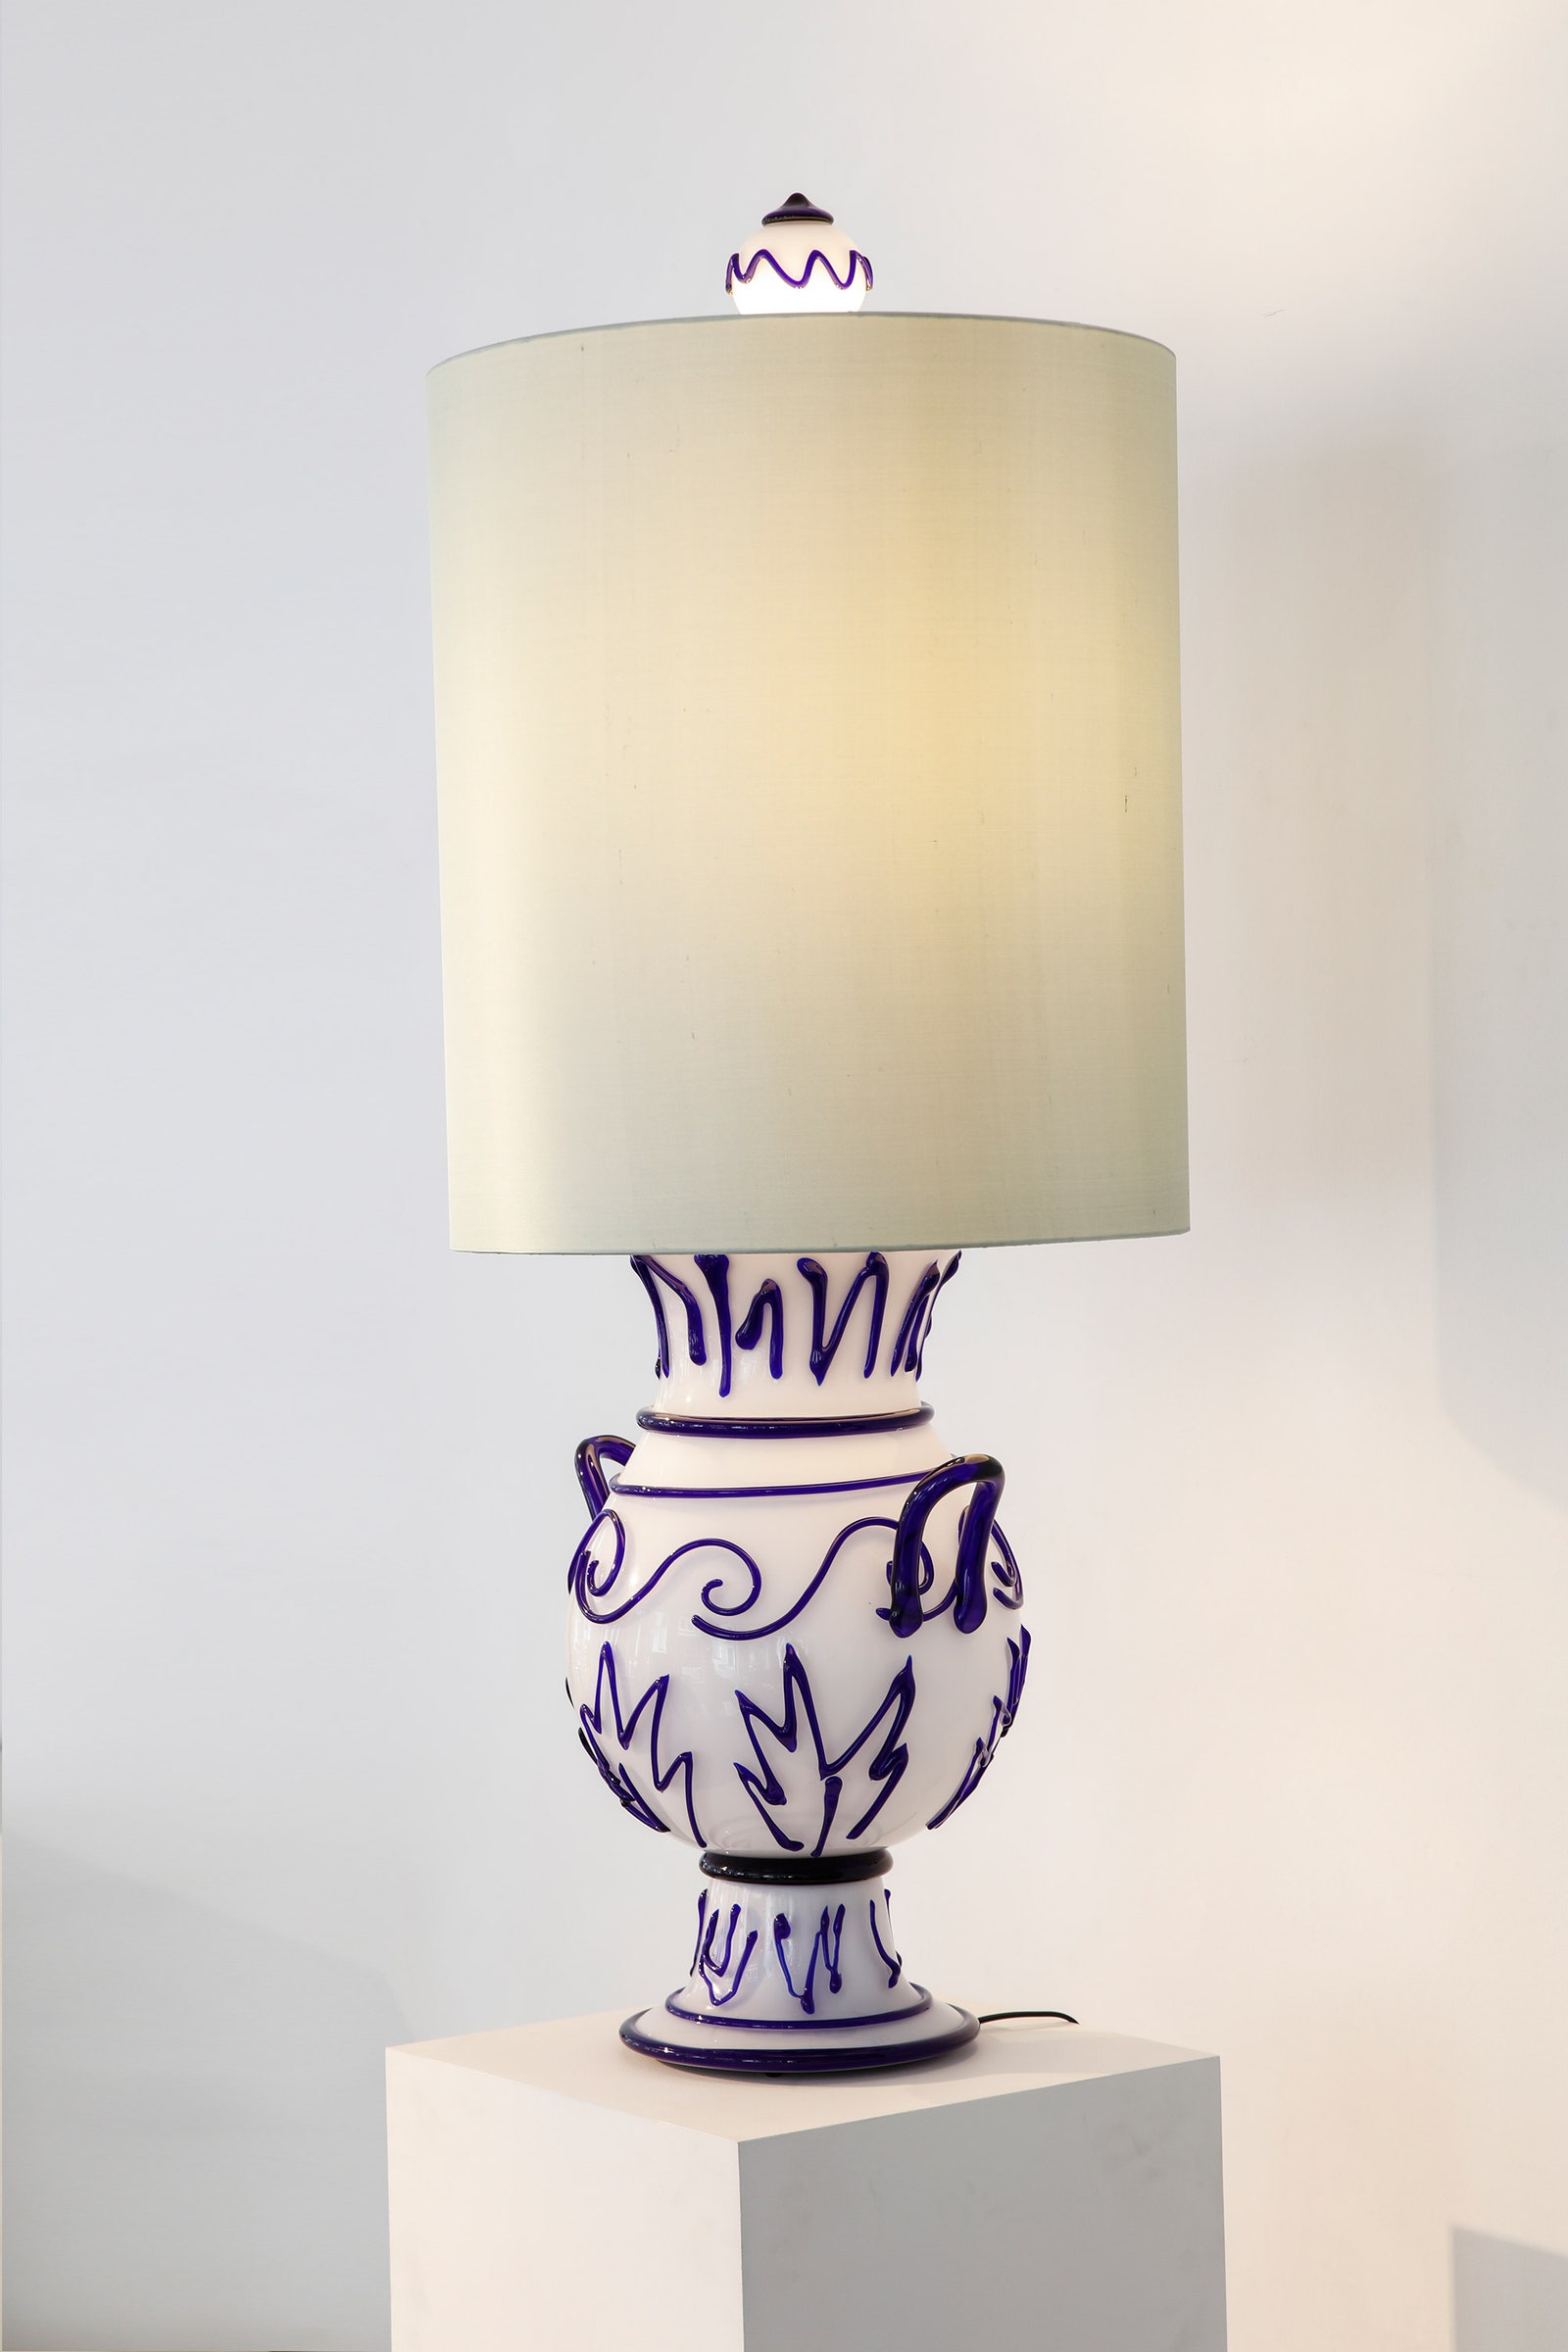 Настольная лампа Murano. Дизайн Маттиа Бонетти. David Gill Gallery. Цена ₤25 000.